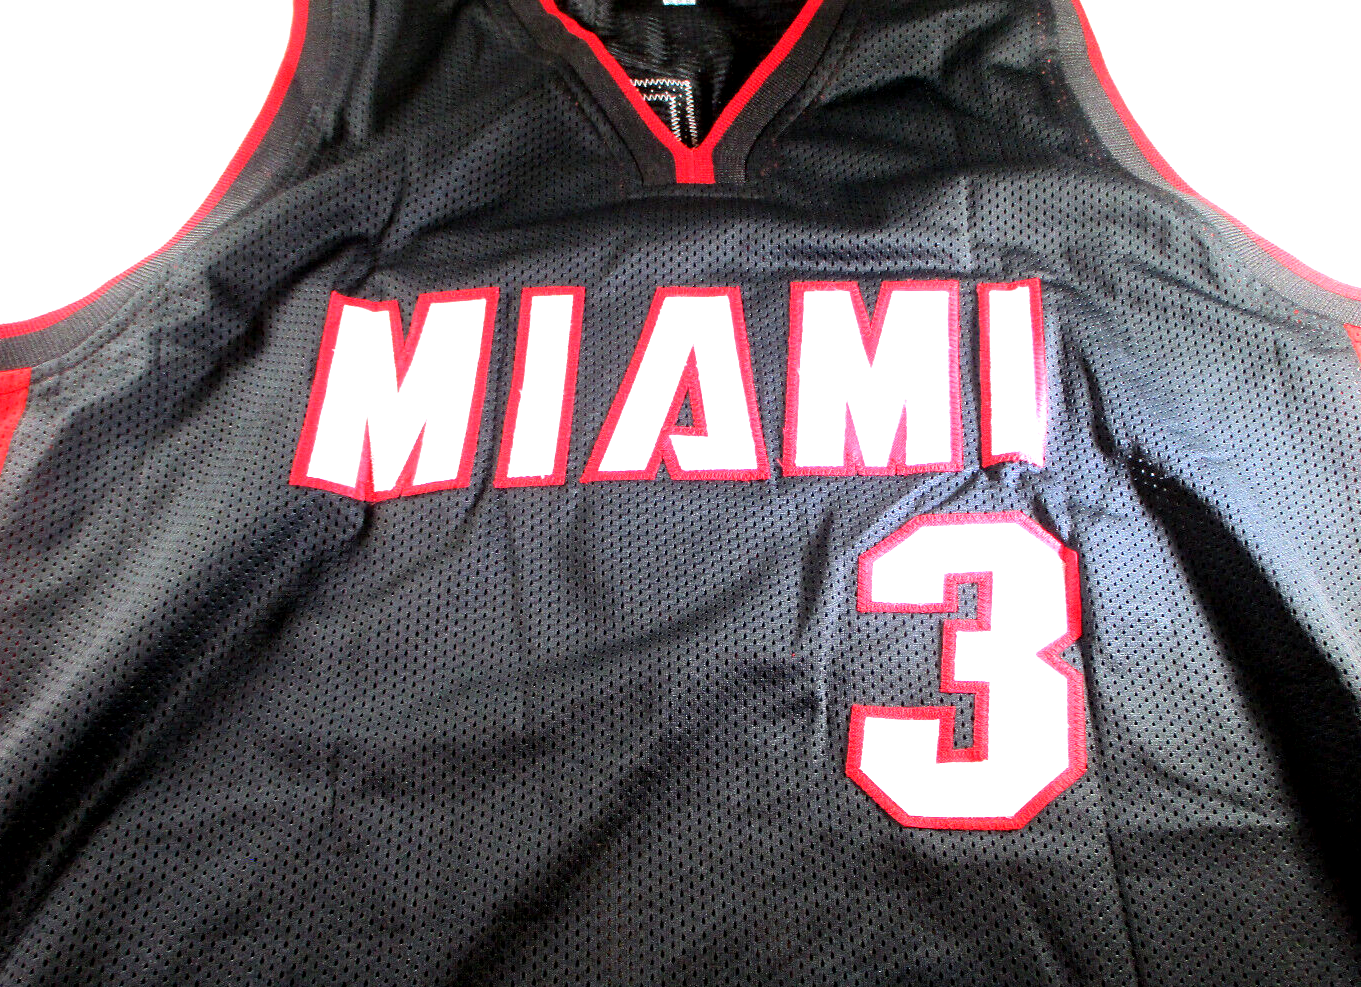 Dwayne Wade / Autographed Miami Heat Black Custom Basketball Jersey / C.O.A.